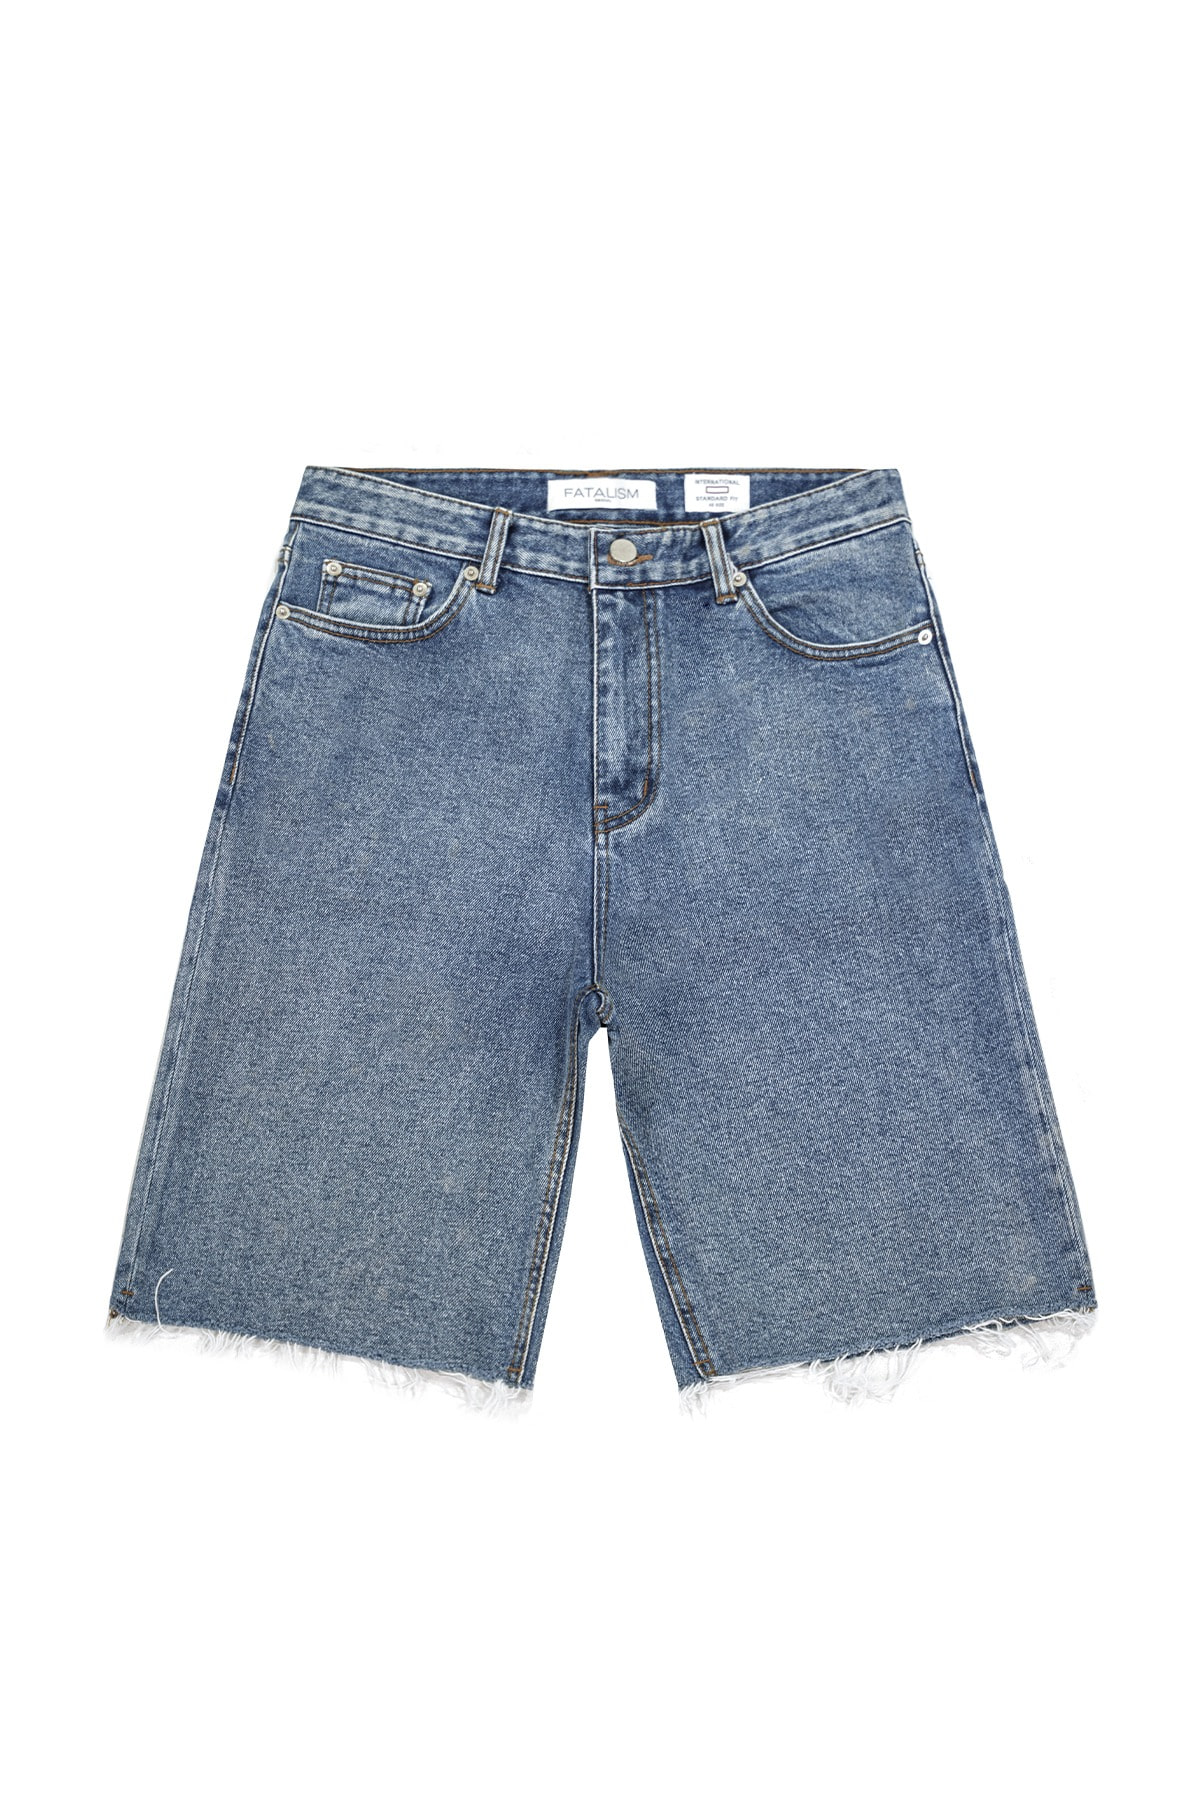 #0142 middle blue standard 1/2 short pants